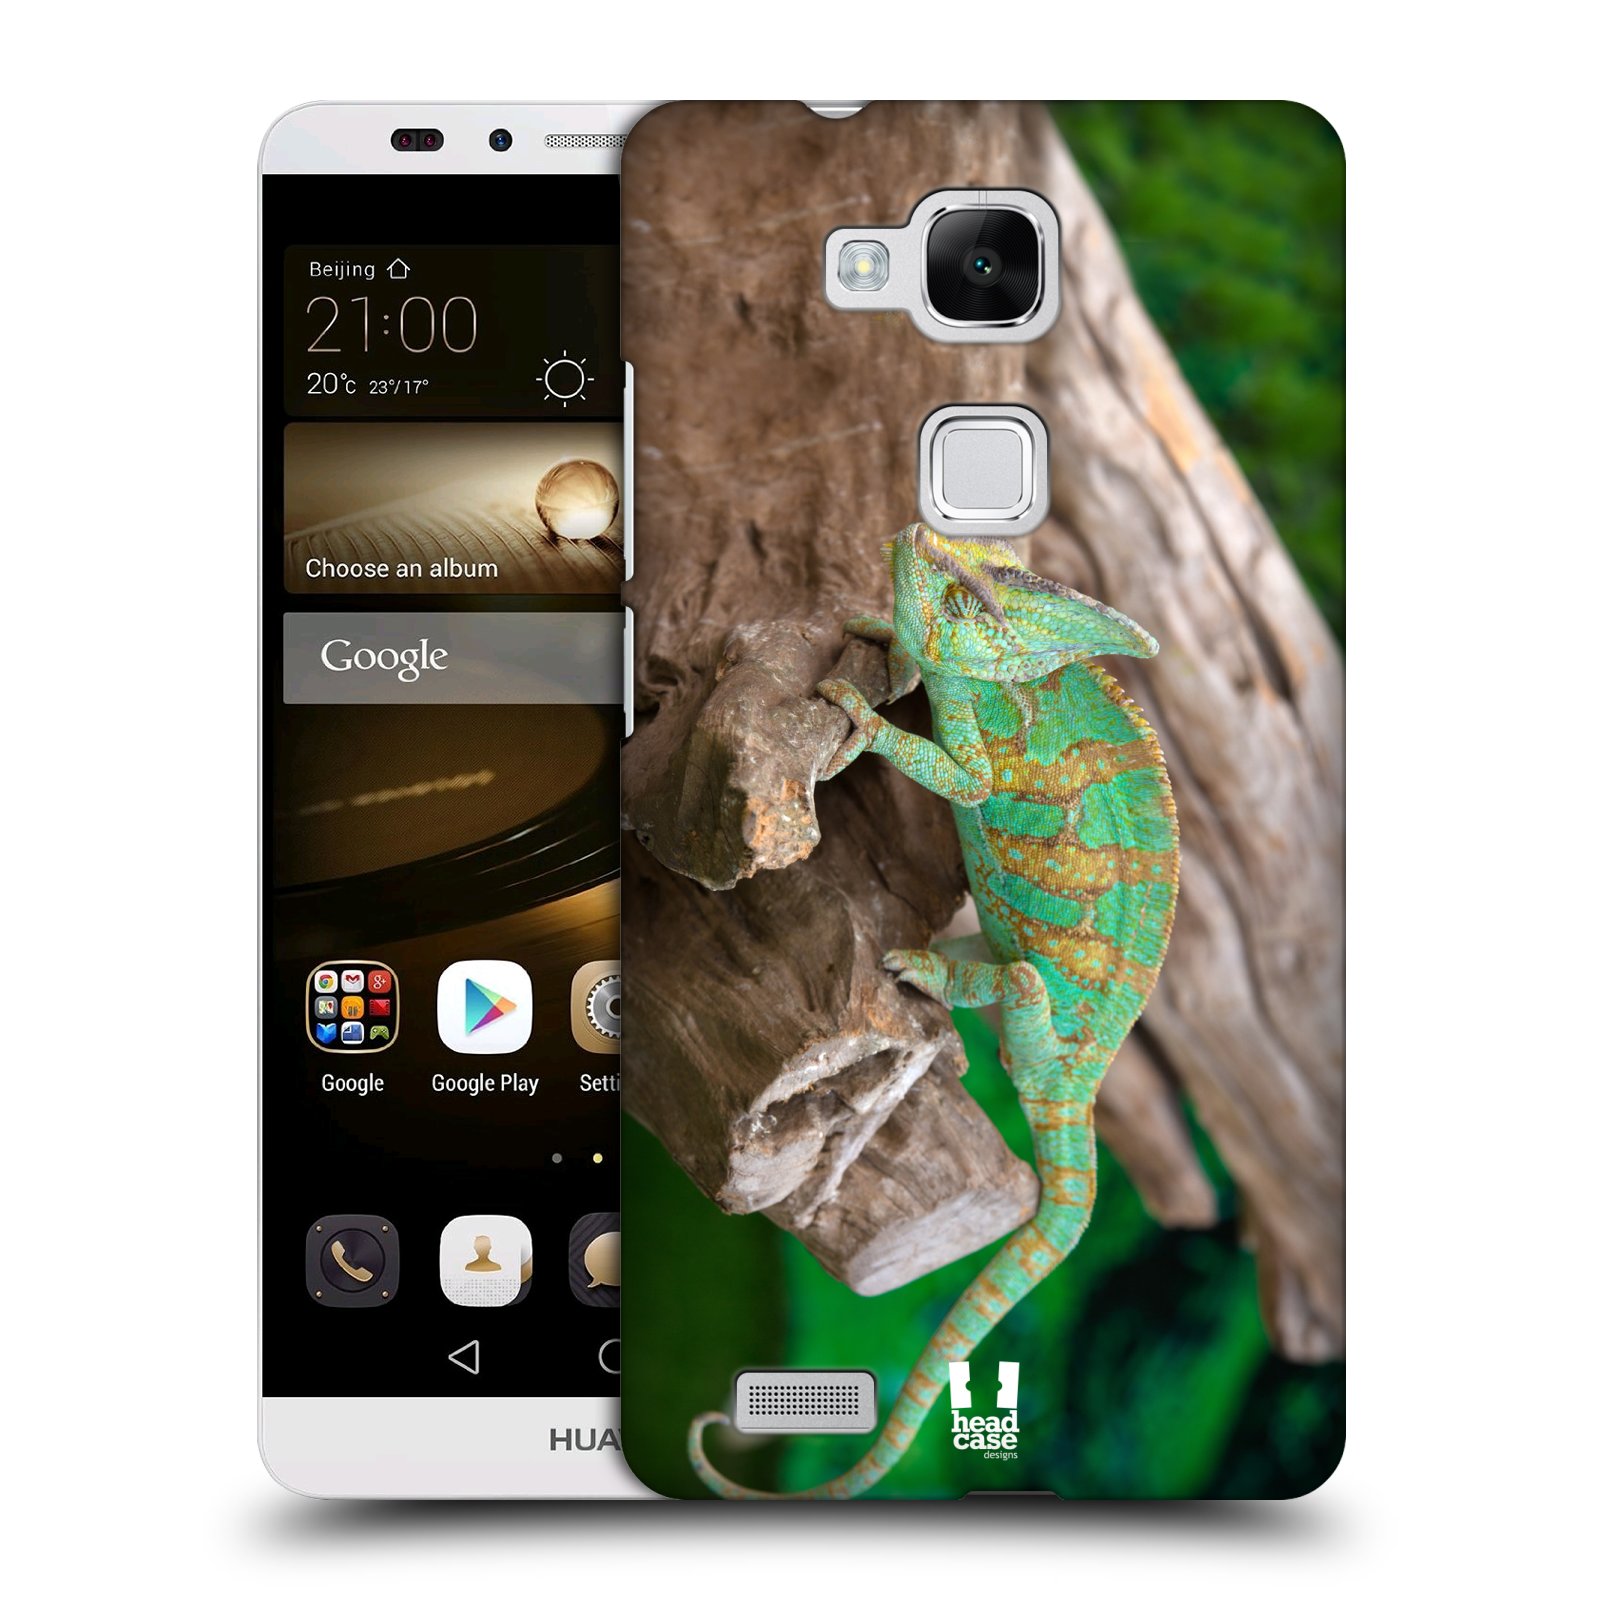 HEAD CASE plastový obal na mobil Huawei Mate 7 vzor slavná zvířata foto chameleon